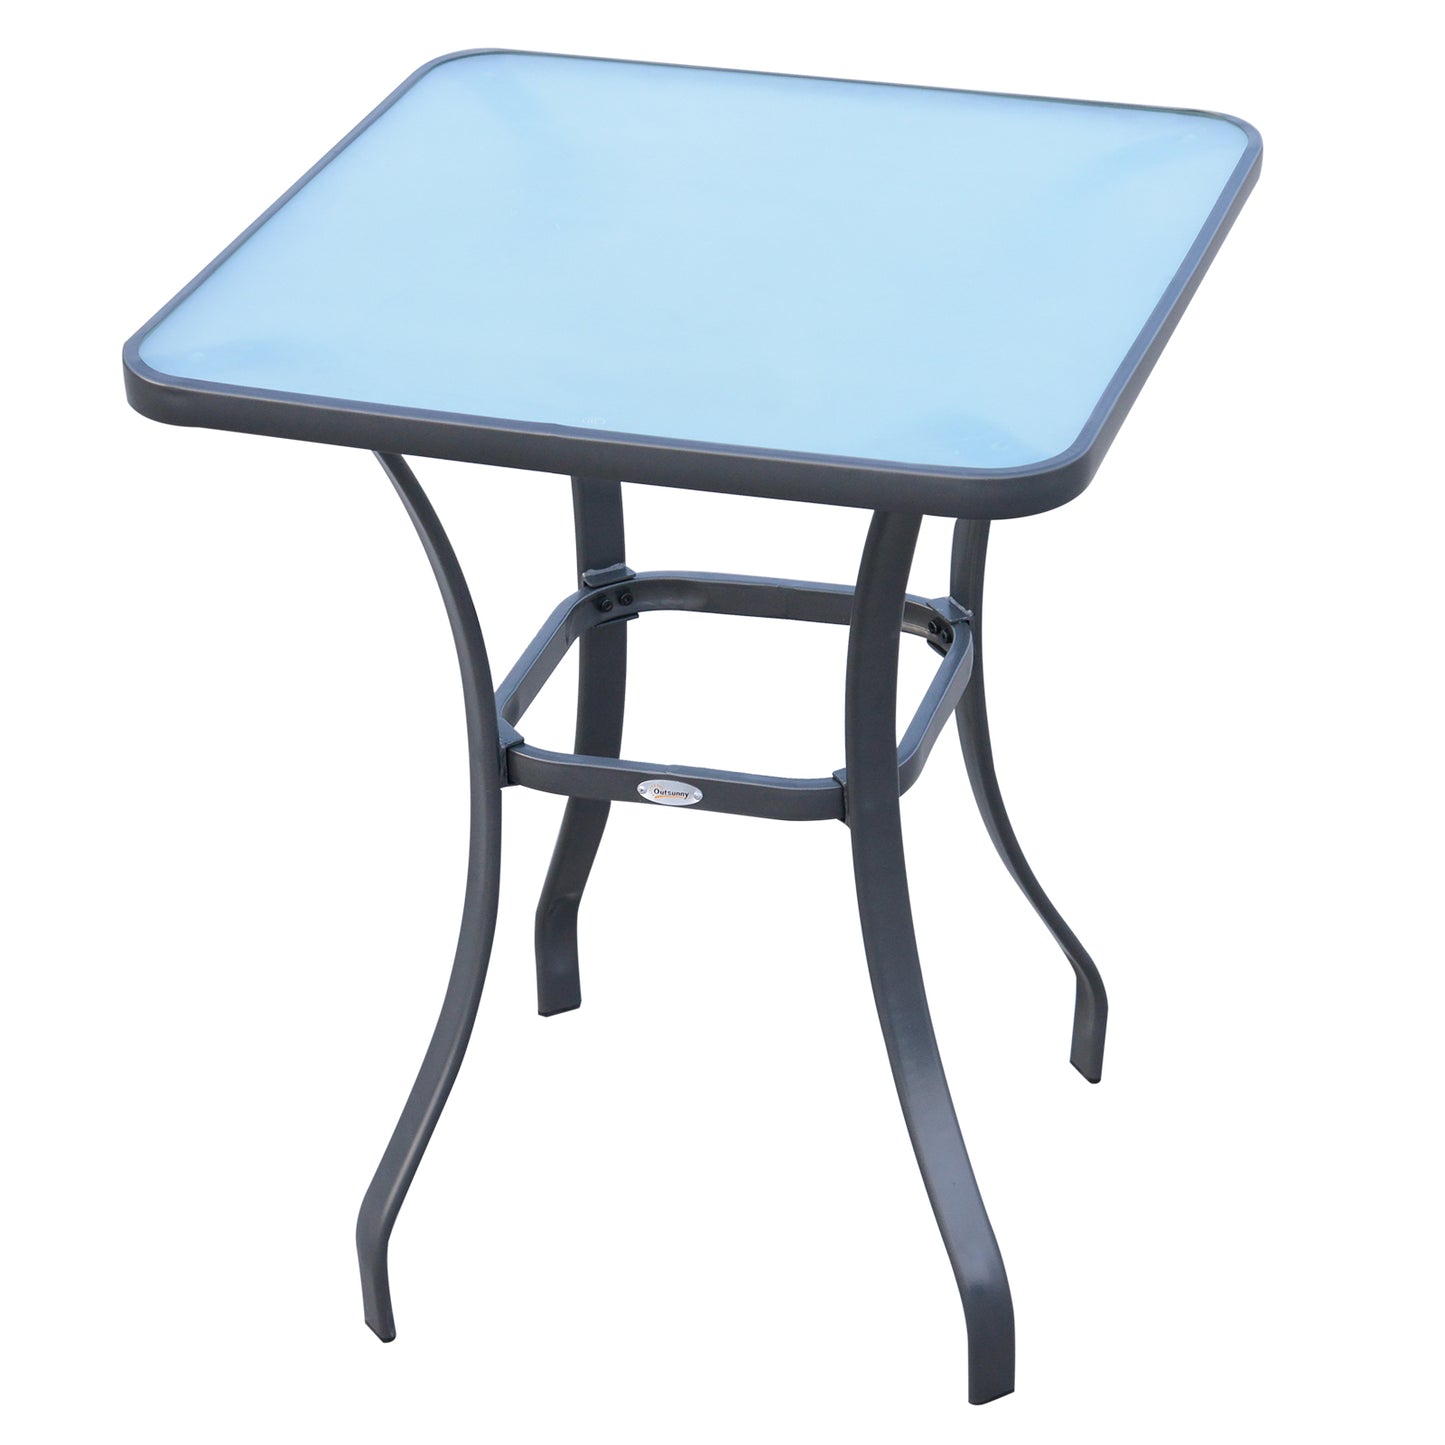 Outsunny Square Glass Bistro Table, 68.5Lx68.5Wx84H cm